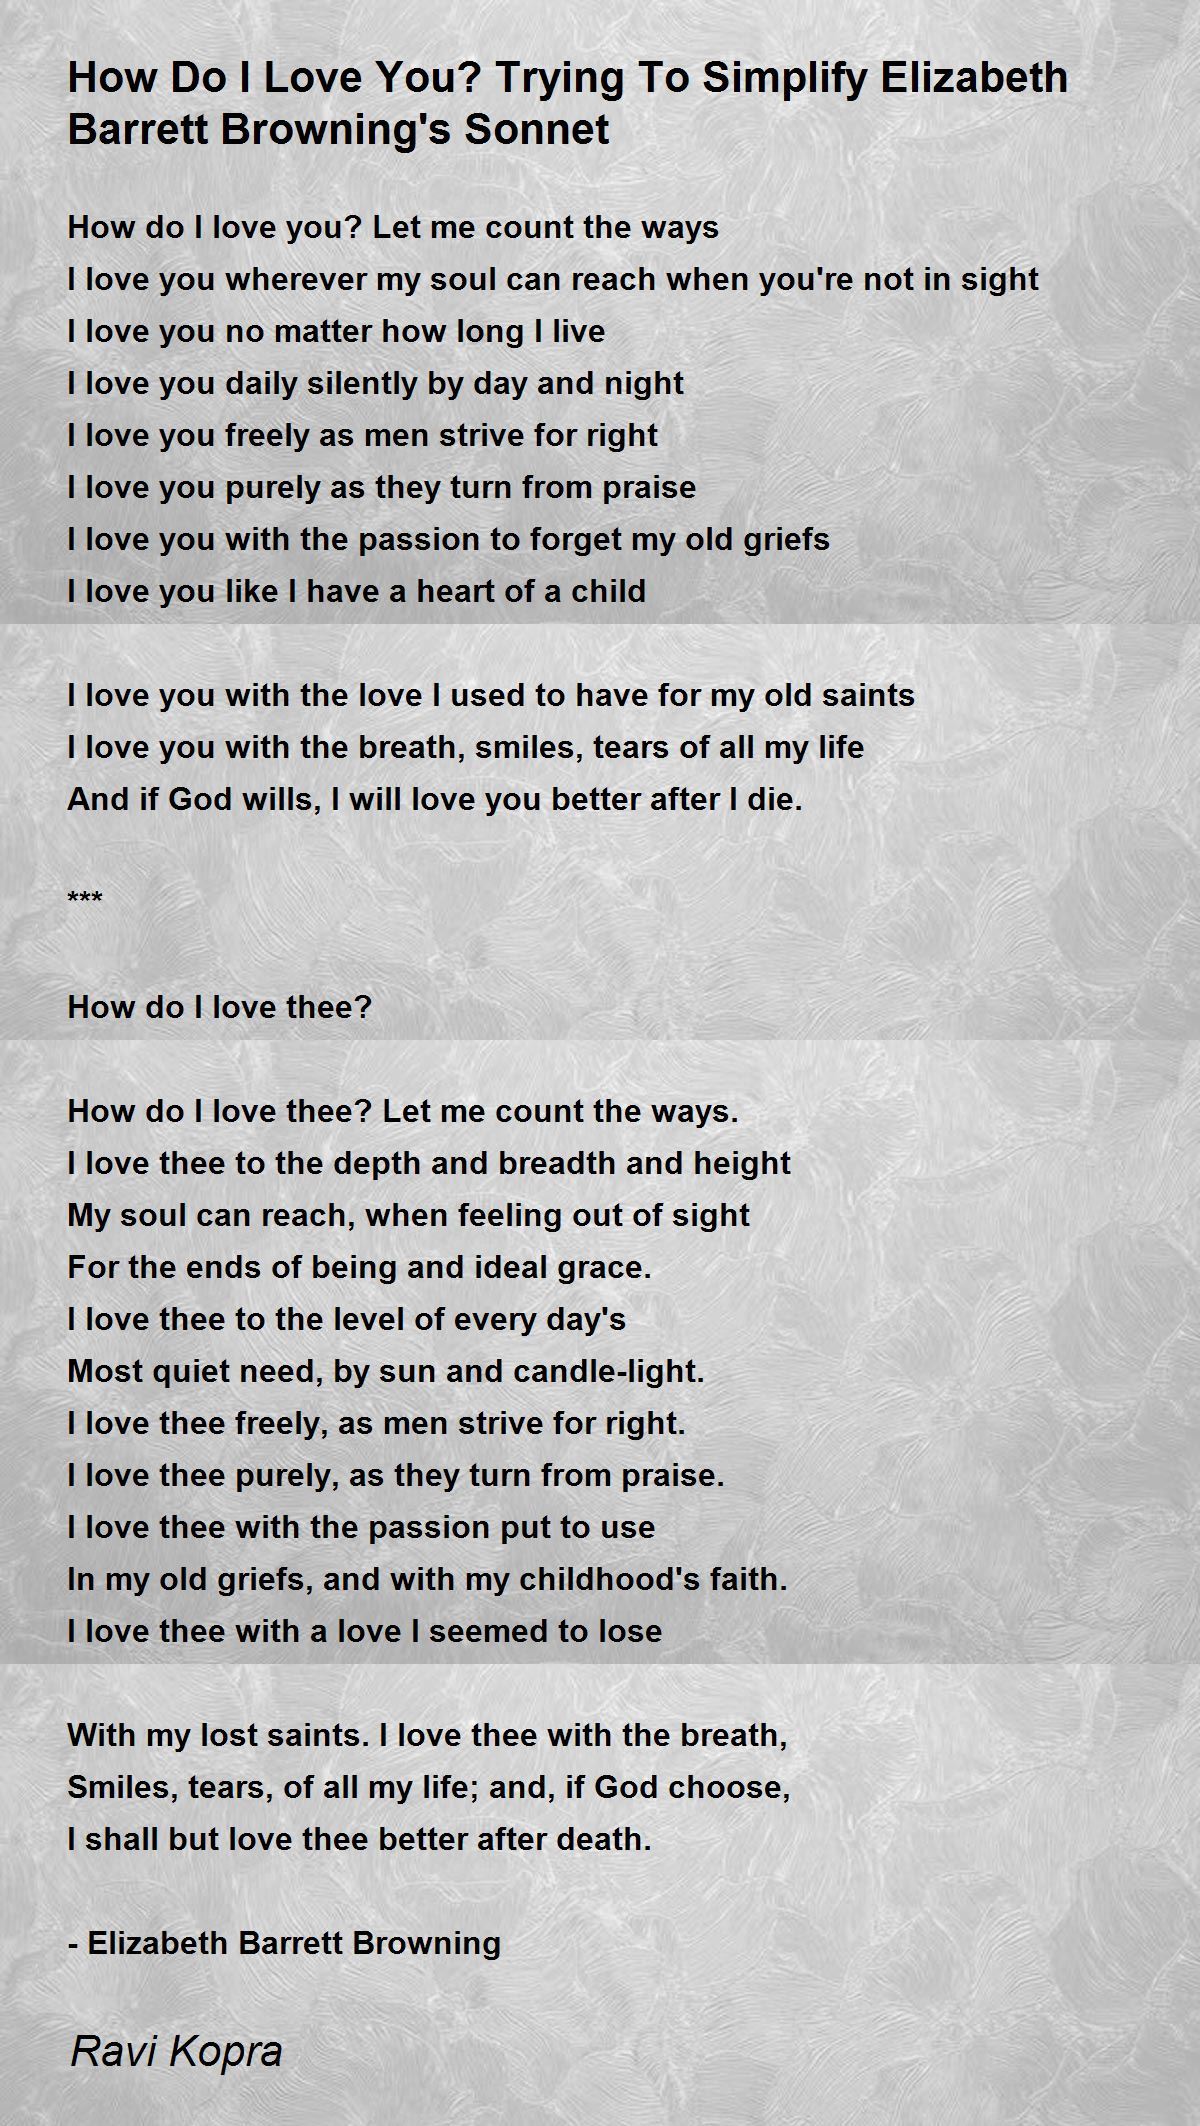 How Do I Love You Trying To Simplify Elizabeth Barrett Browning S Sonnet By Ravi Kopra How Do I Love You Trying To Simplify Elizabeth Barrett Browning S Sonnet Poem